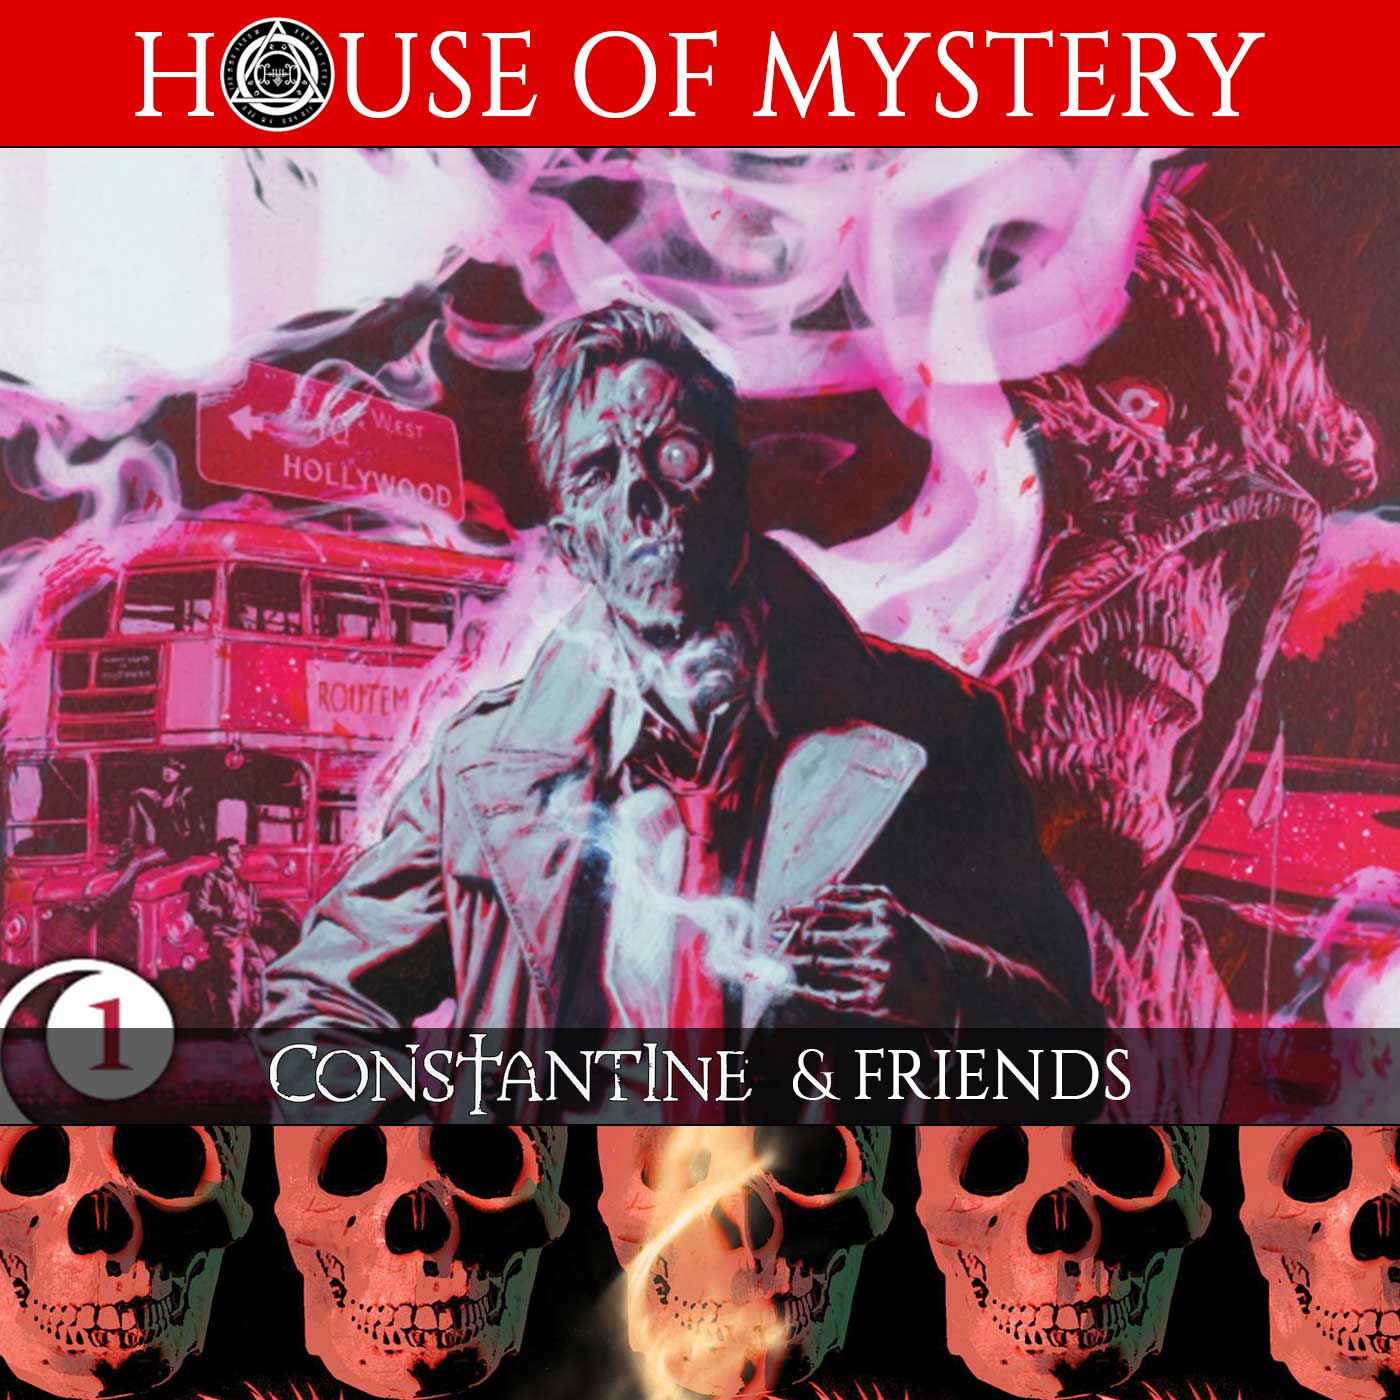 John Constantine: Hellblazer – Dead in America #1